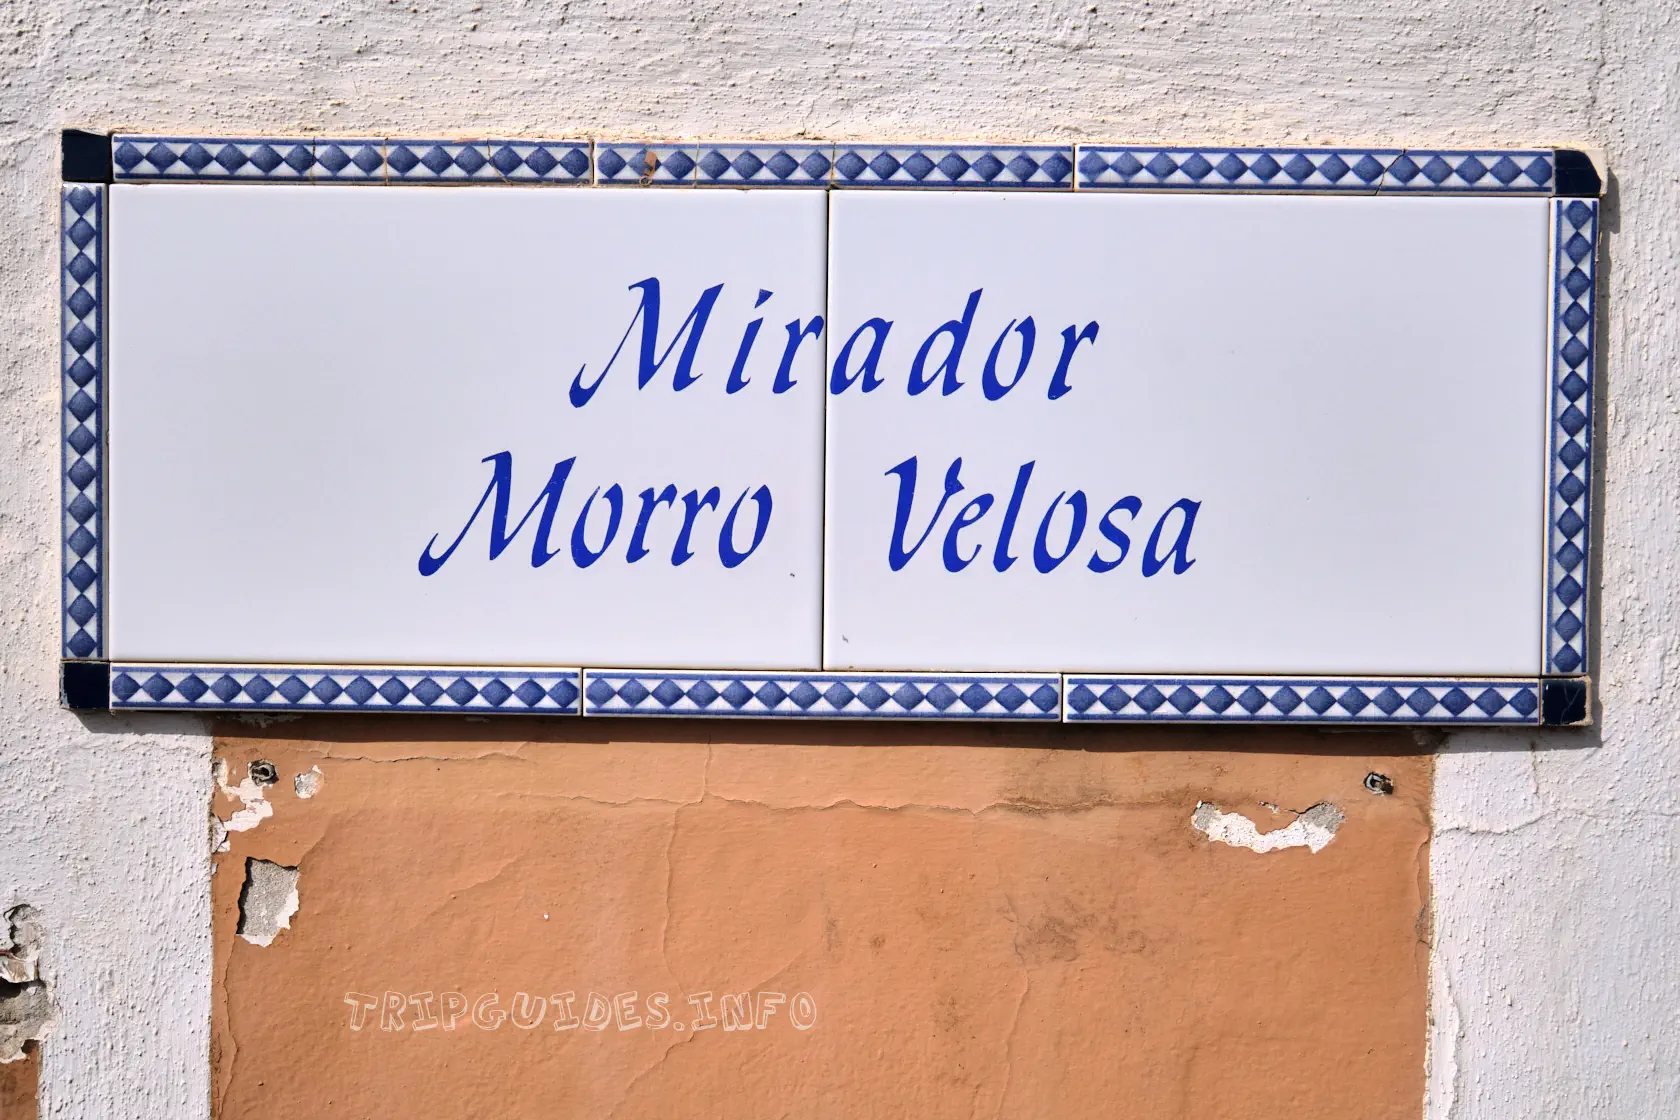 Смотровая площадка Морро Велоса (Mirador De Morro Velosa) - Фуэртевентура